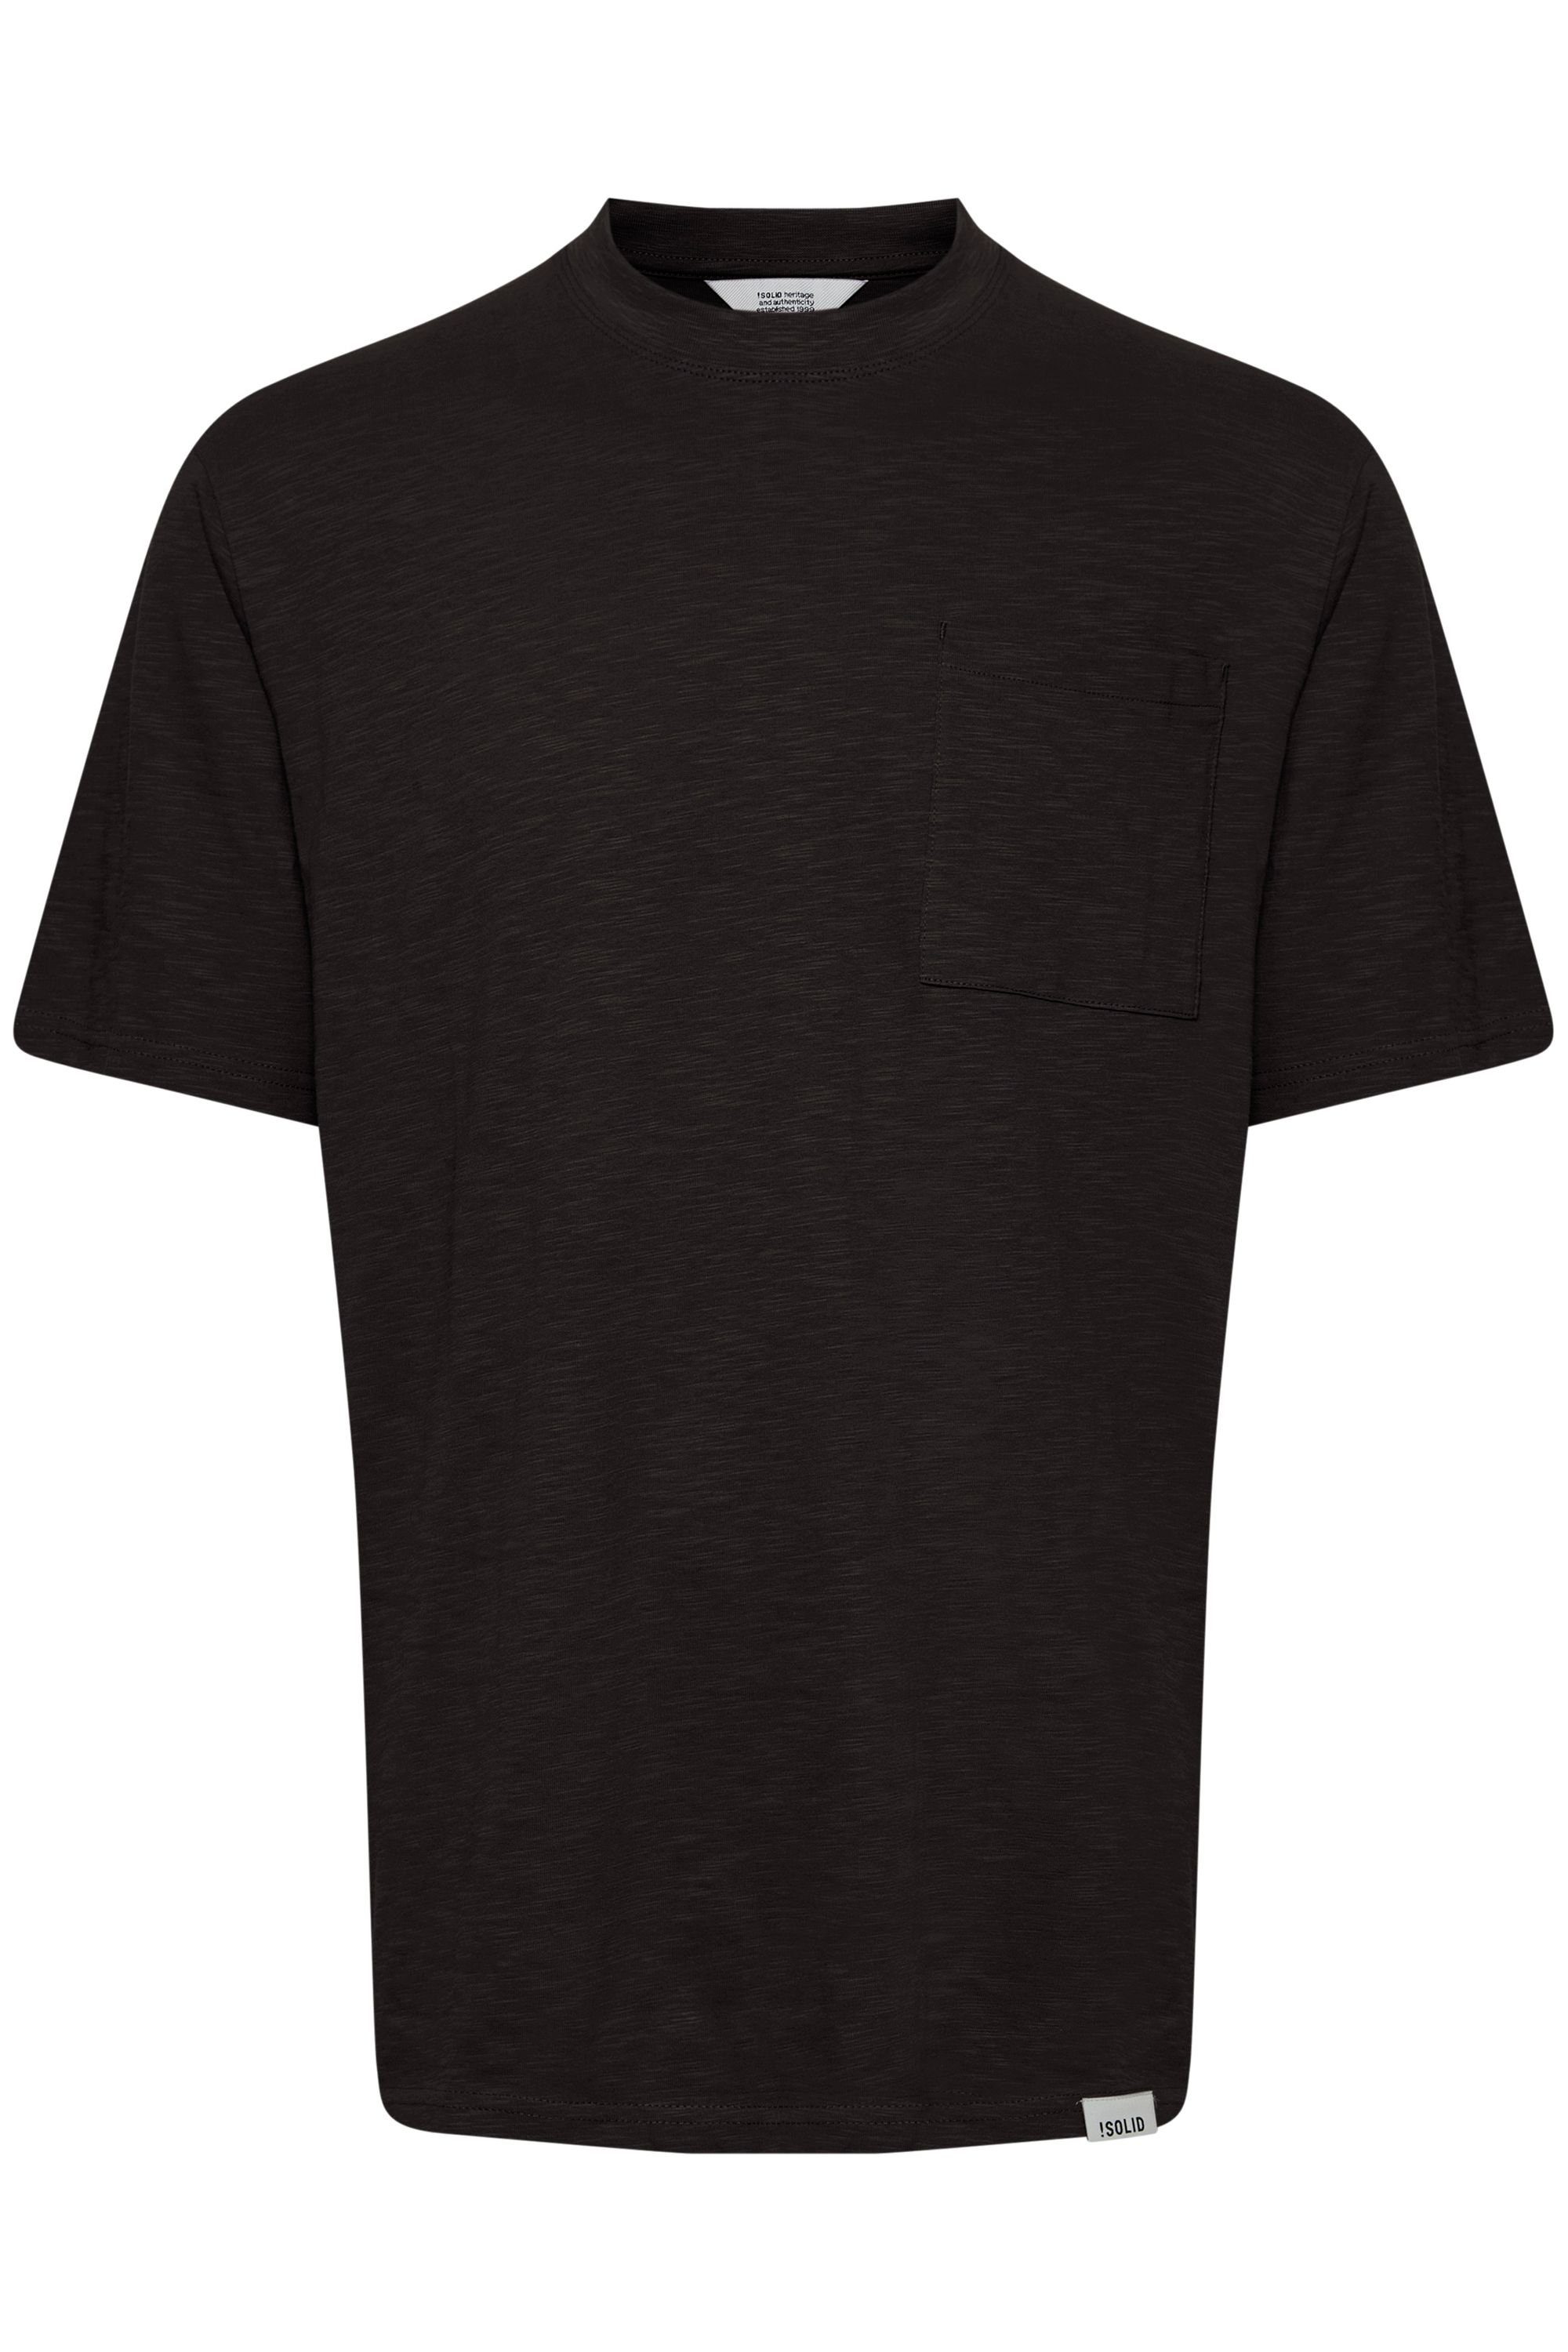 (194008) Black S !Solid SDDurant T-Shirt 21107372 True